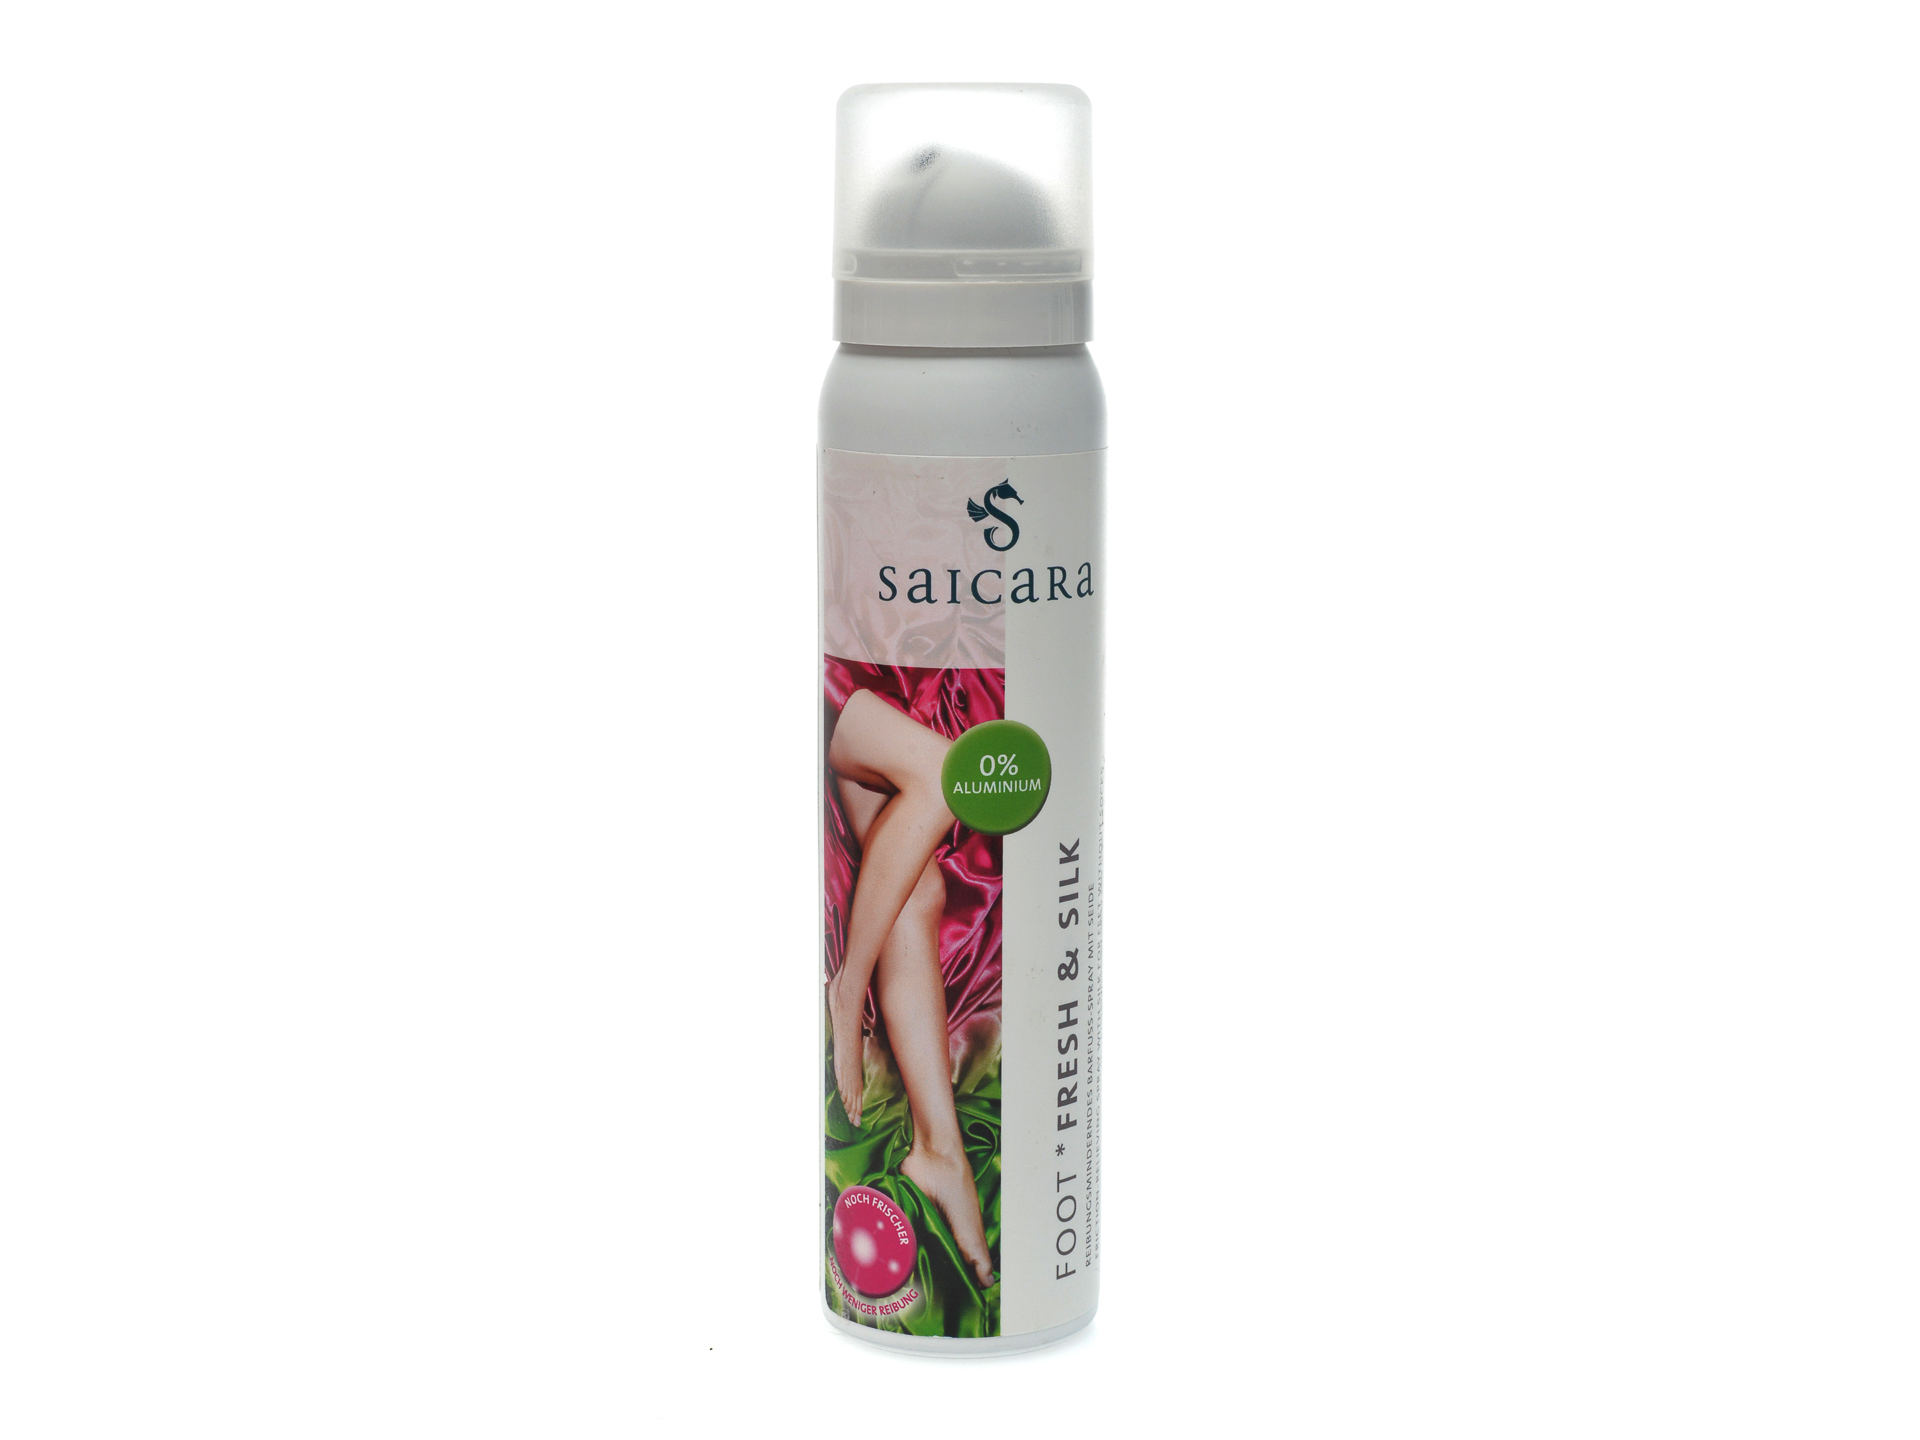 PR Spray-deodorant pentru picioare, Solitaire imagine reduceri black friday 2021 otter.ro